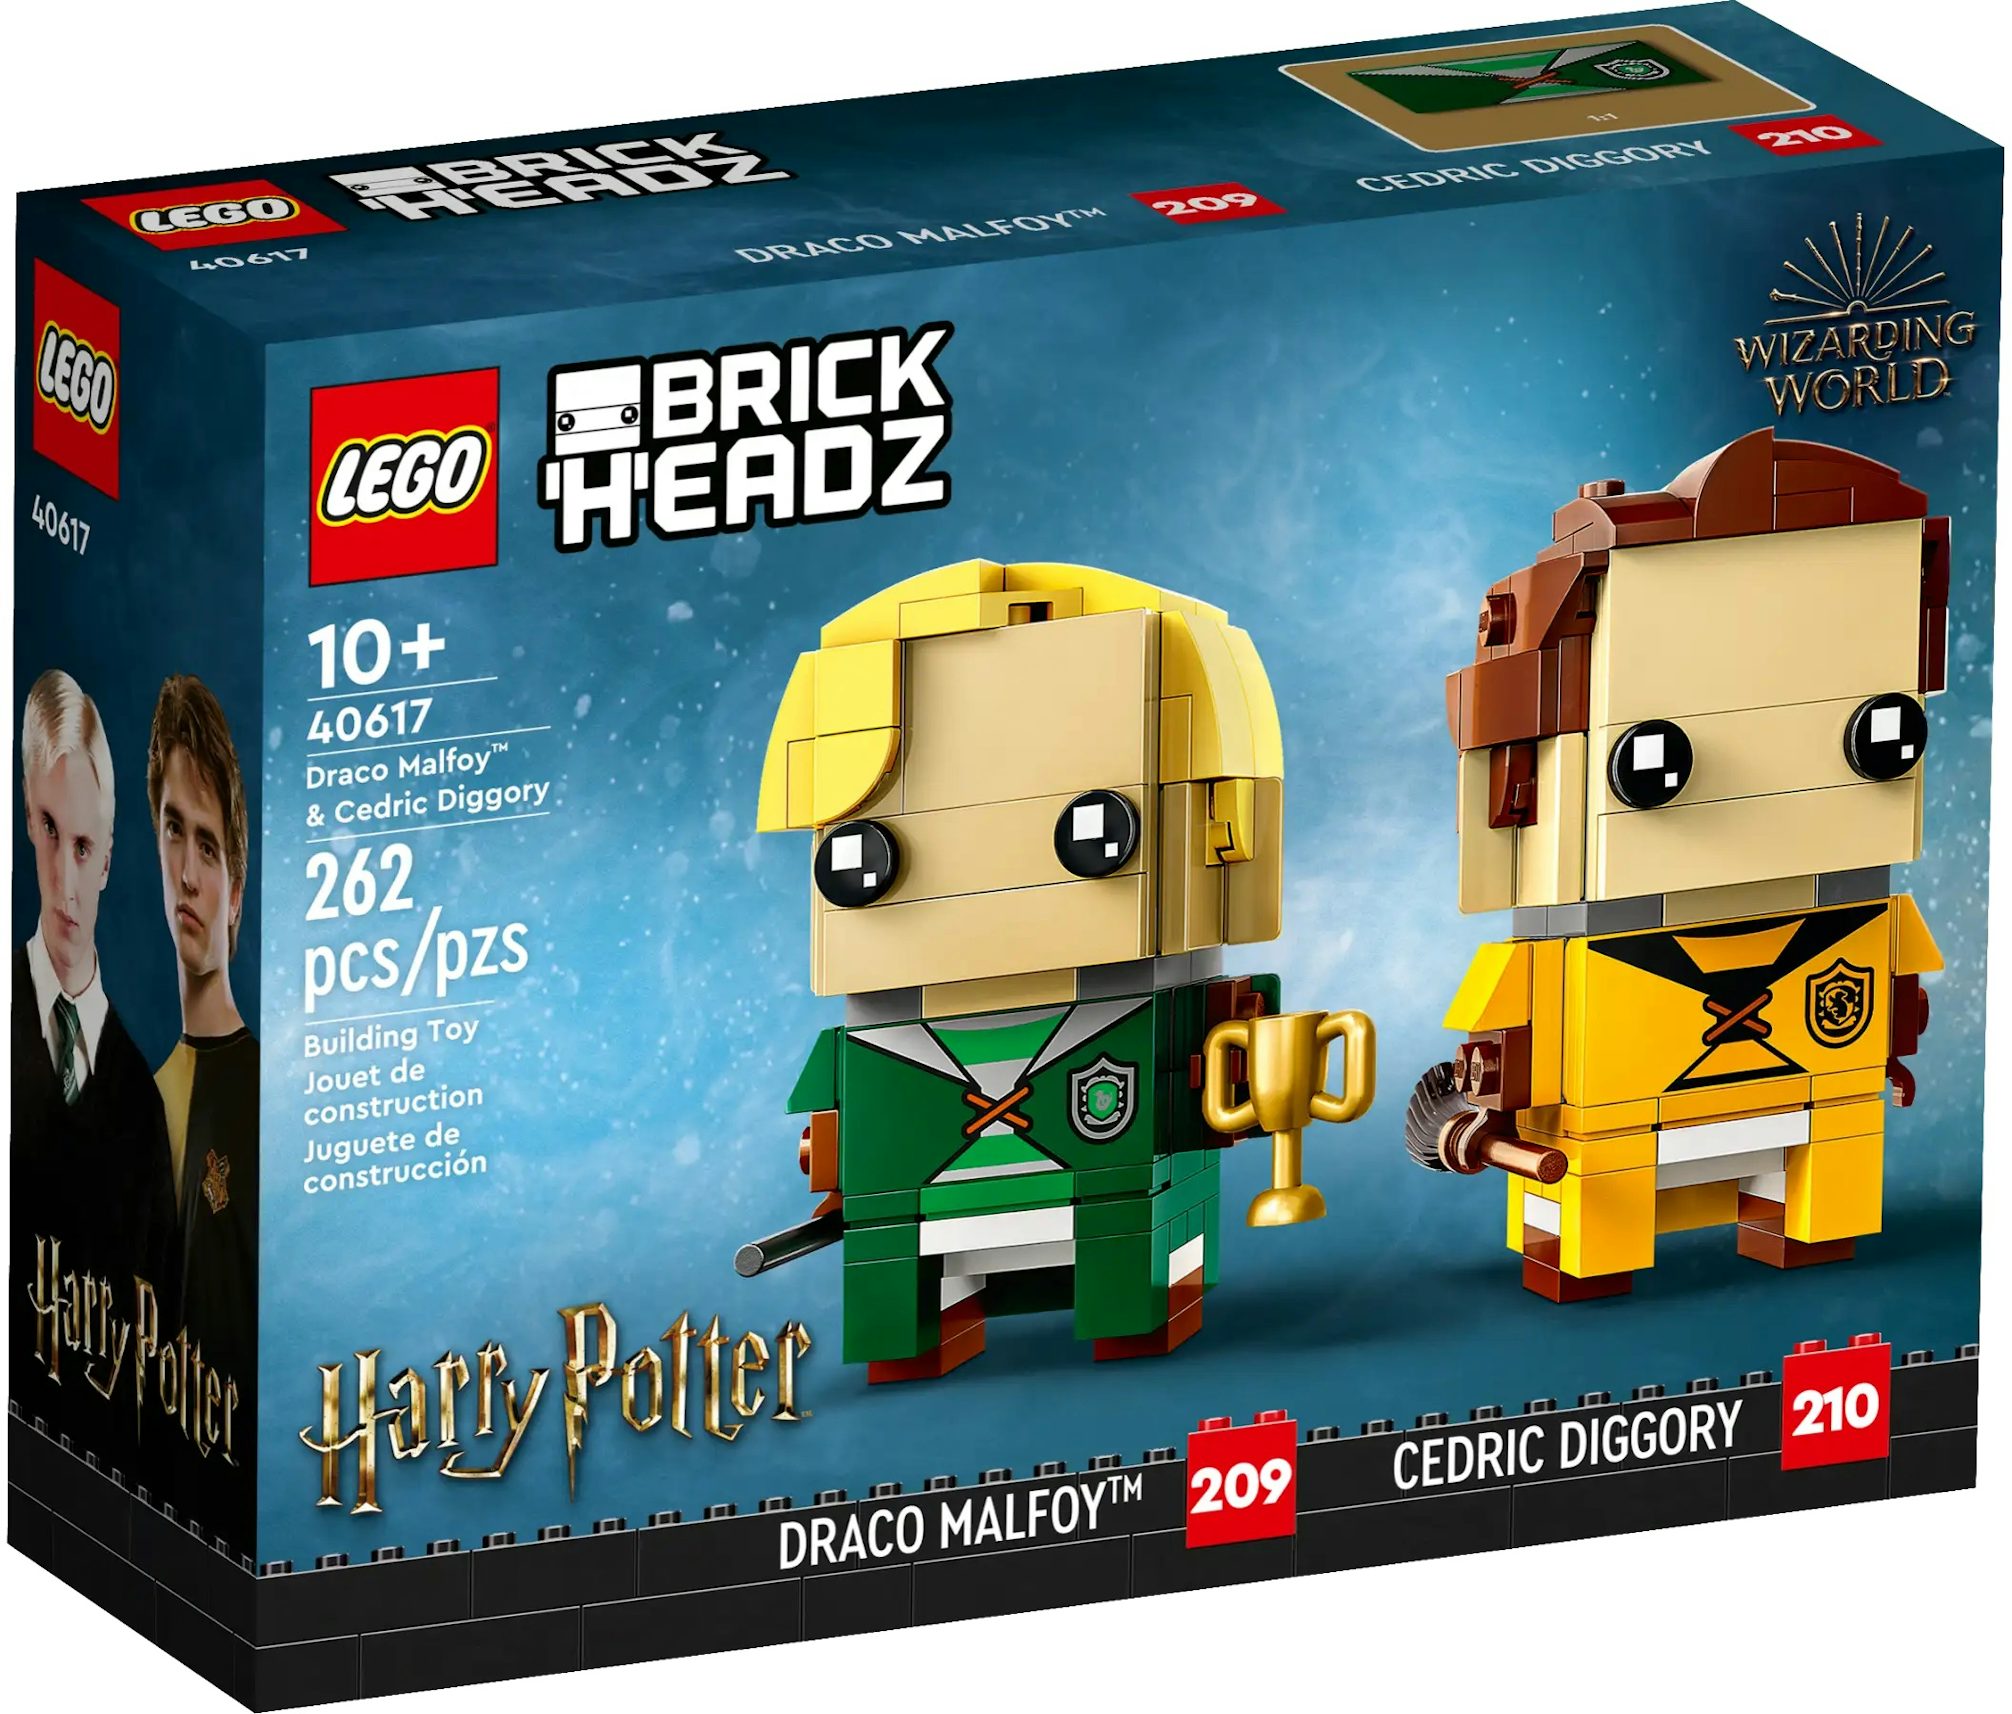 https://images.stockx.com/images/LEGO-Brickheadz-Harry-Potter-Draco-Malfoy-Cedric-Diggory-Set-40617.jpg?fit=fill&bg=FFFFFF&w=1200&h=857&fm=jpg&auto=compress&dpr=2&trim=color&updated_at=1683568069&q=60